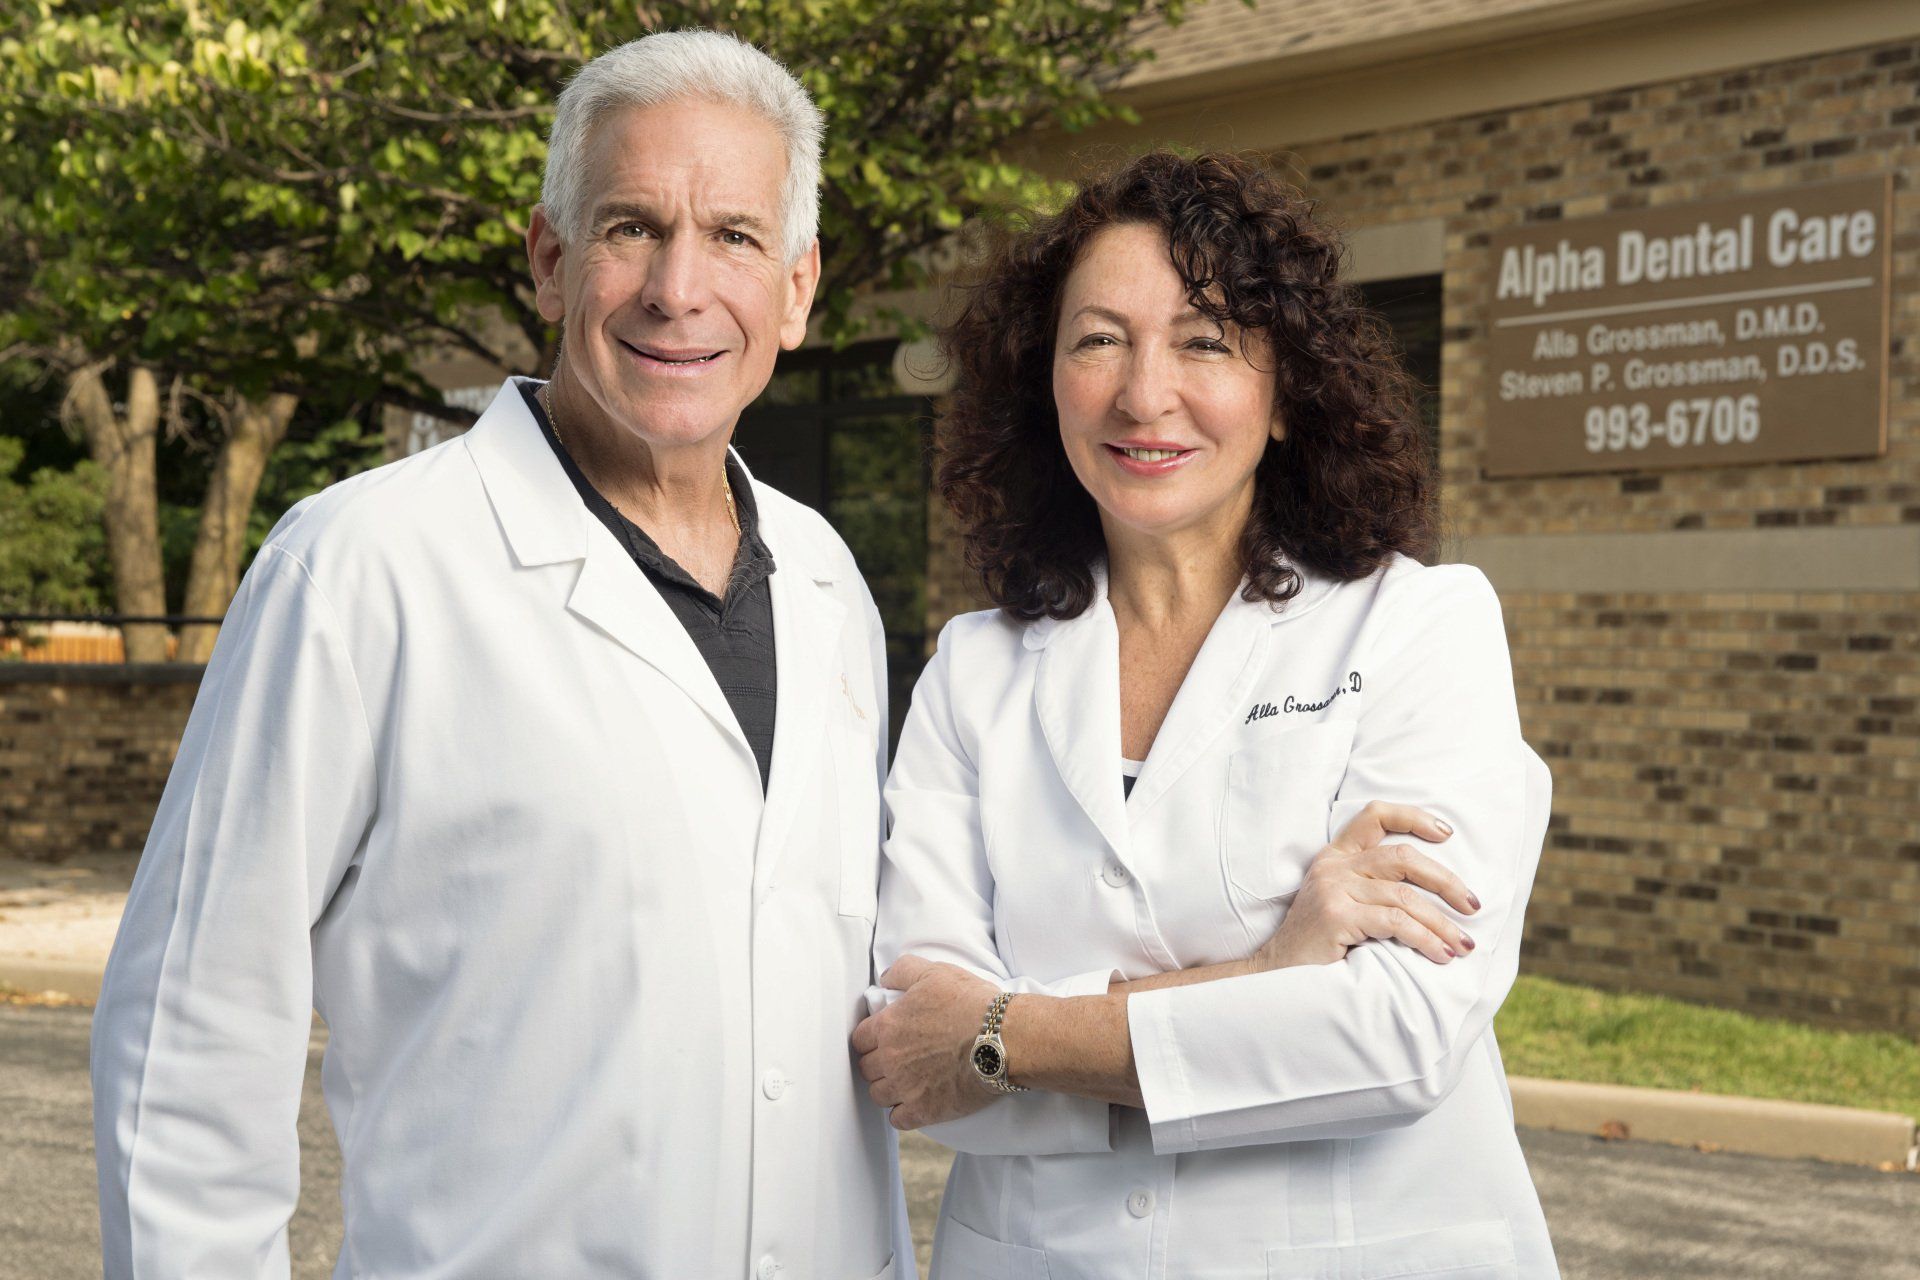 Dr. Steven and Alla Grossman, Alpha Dental Care in St. Louis